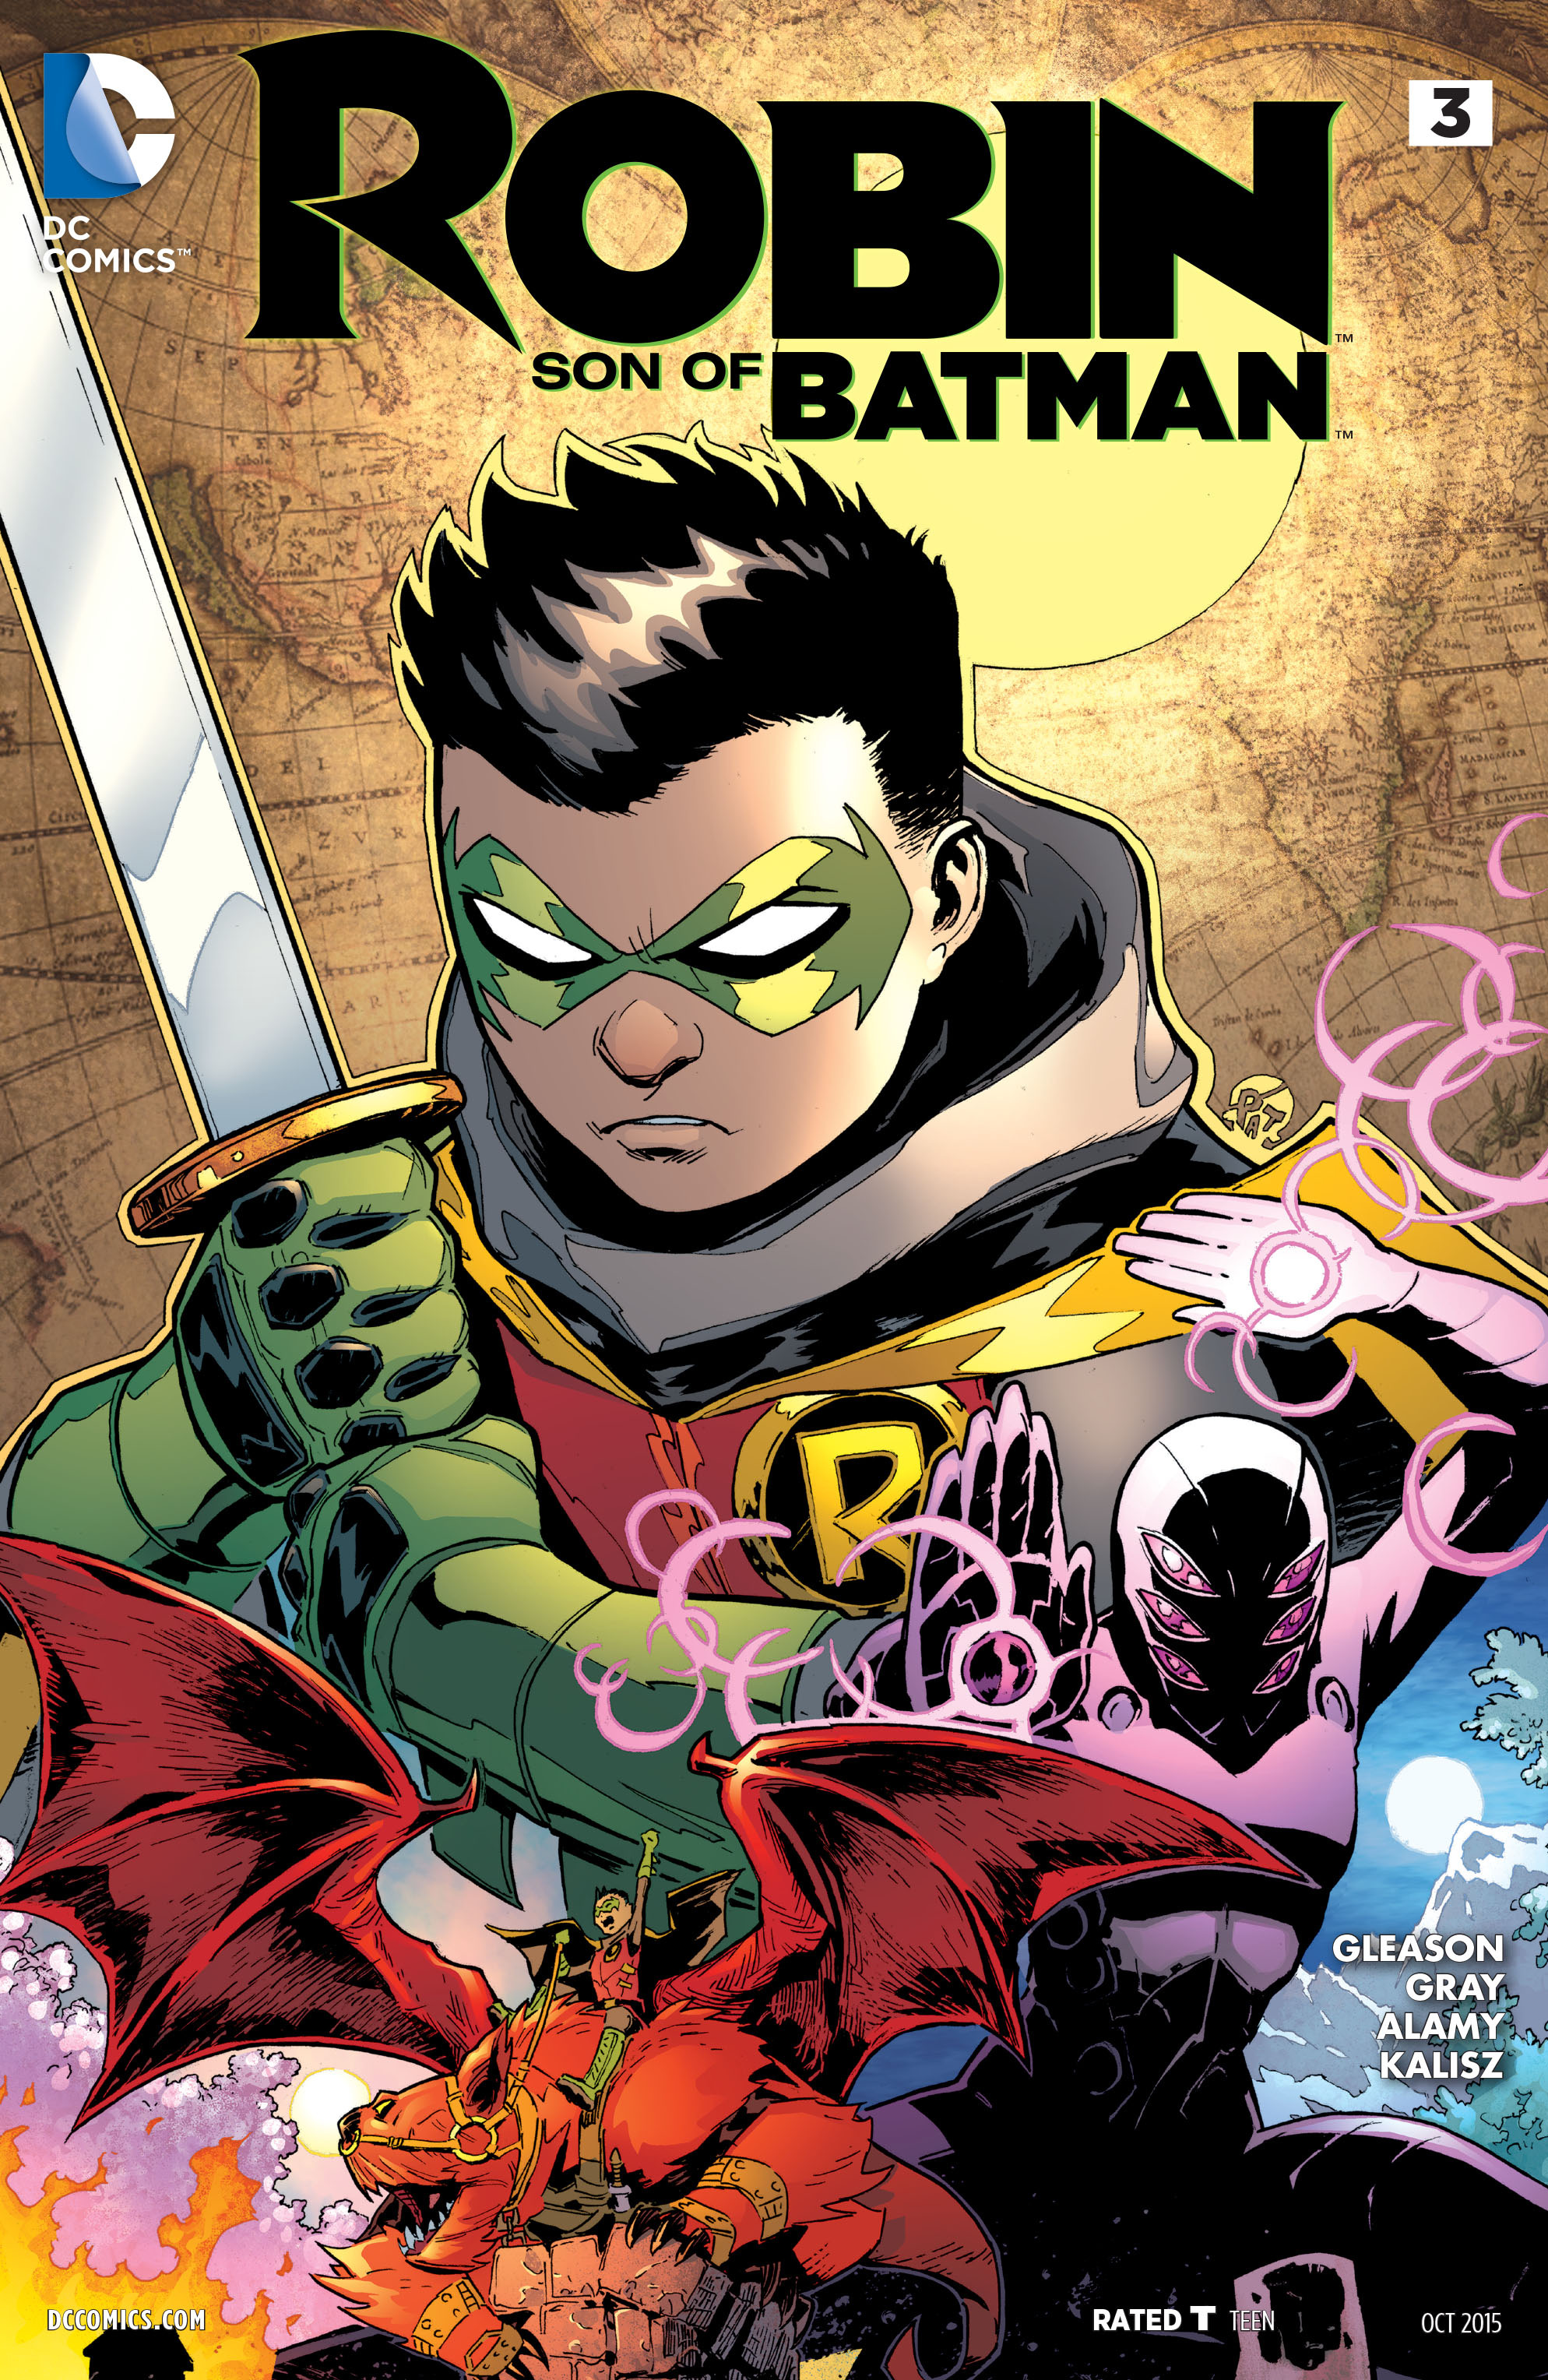 Robin Son Of Batman Issue 3 | Read Robin Son Of Batman Issue 3 comic online  in high quality. Read Full Comic online for free - Read comics online in  high quality .| READ COMIC ONLINE